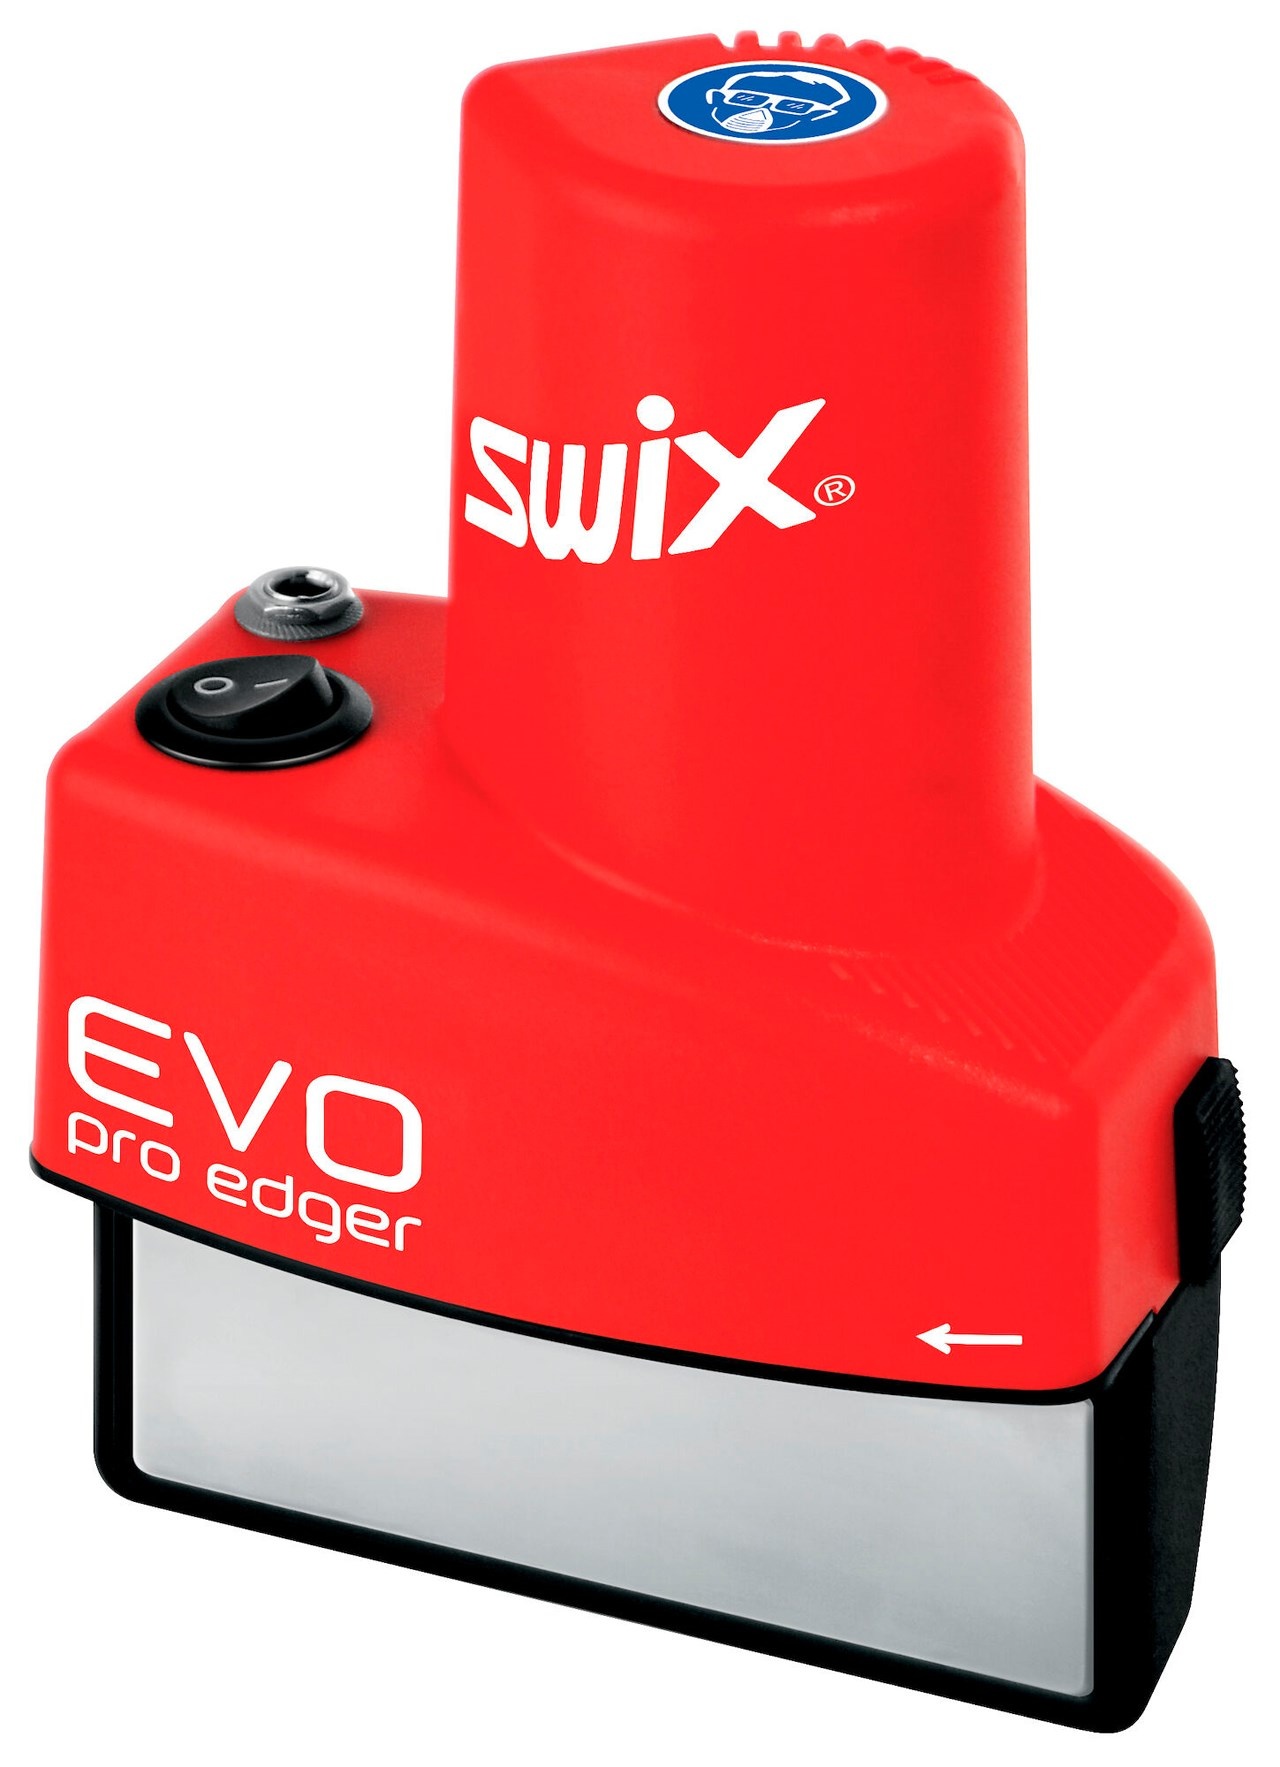 Swix EVO Pro Edge Tuner